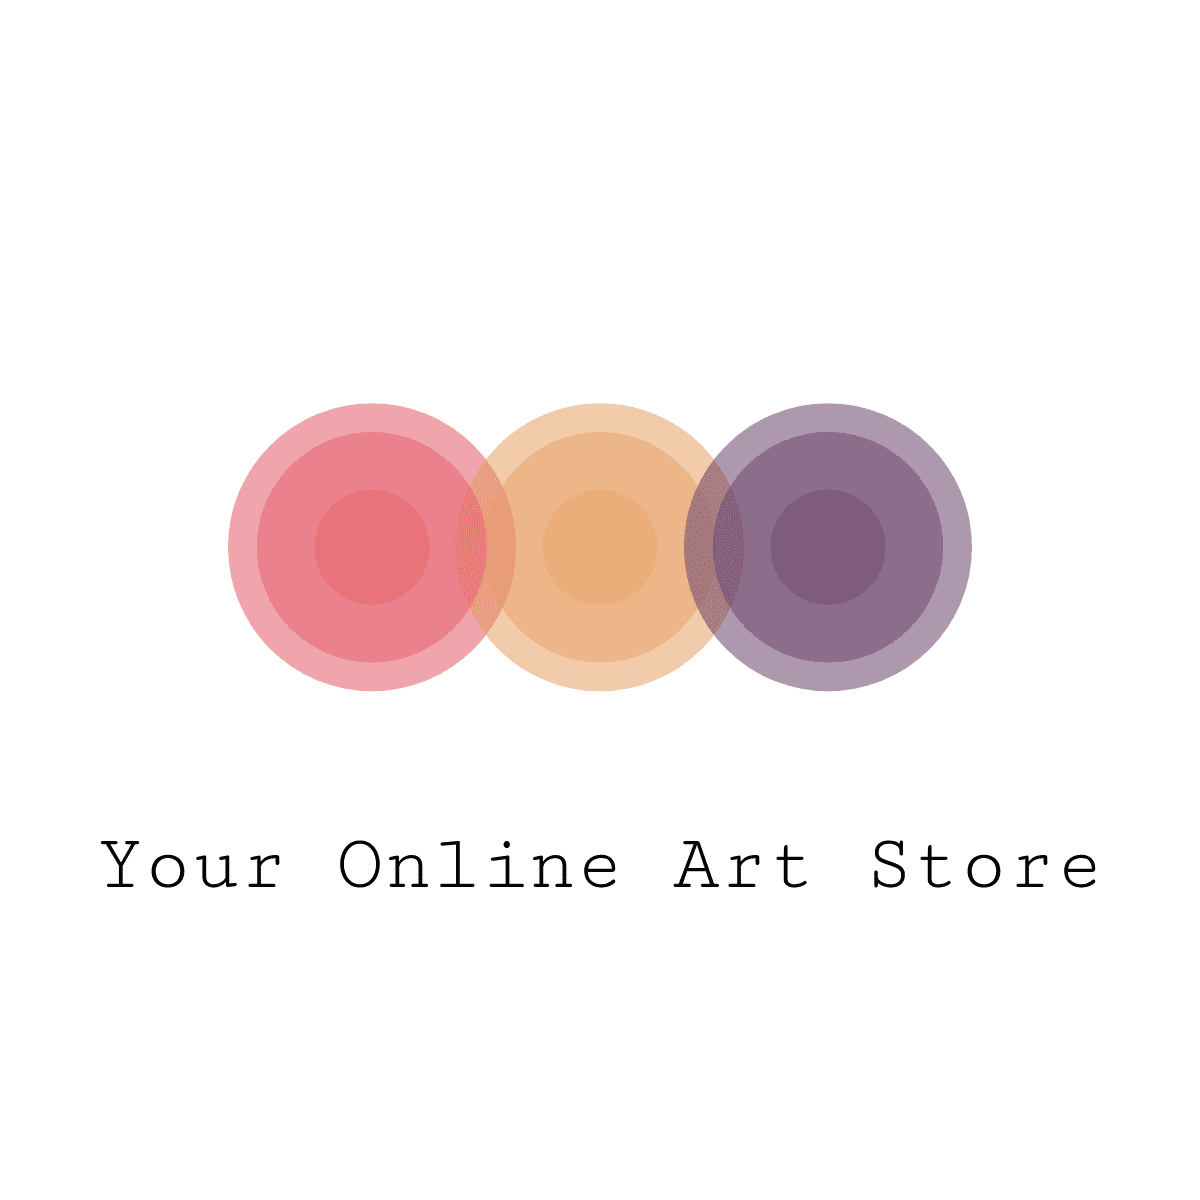 Your Online Art Store